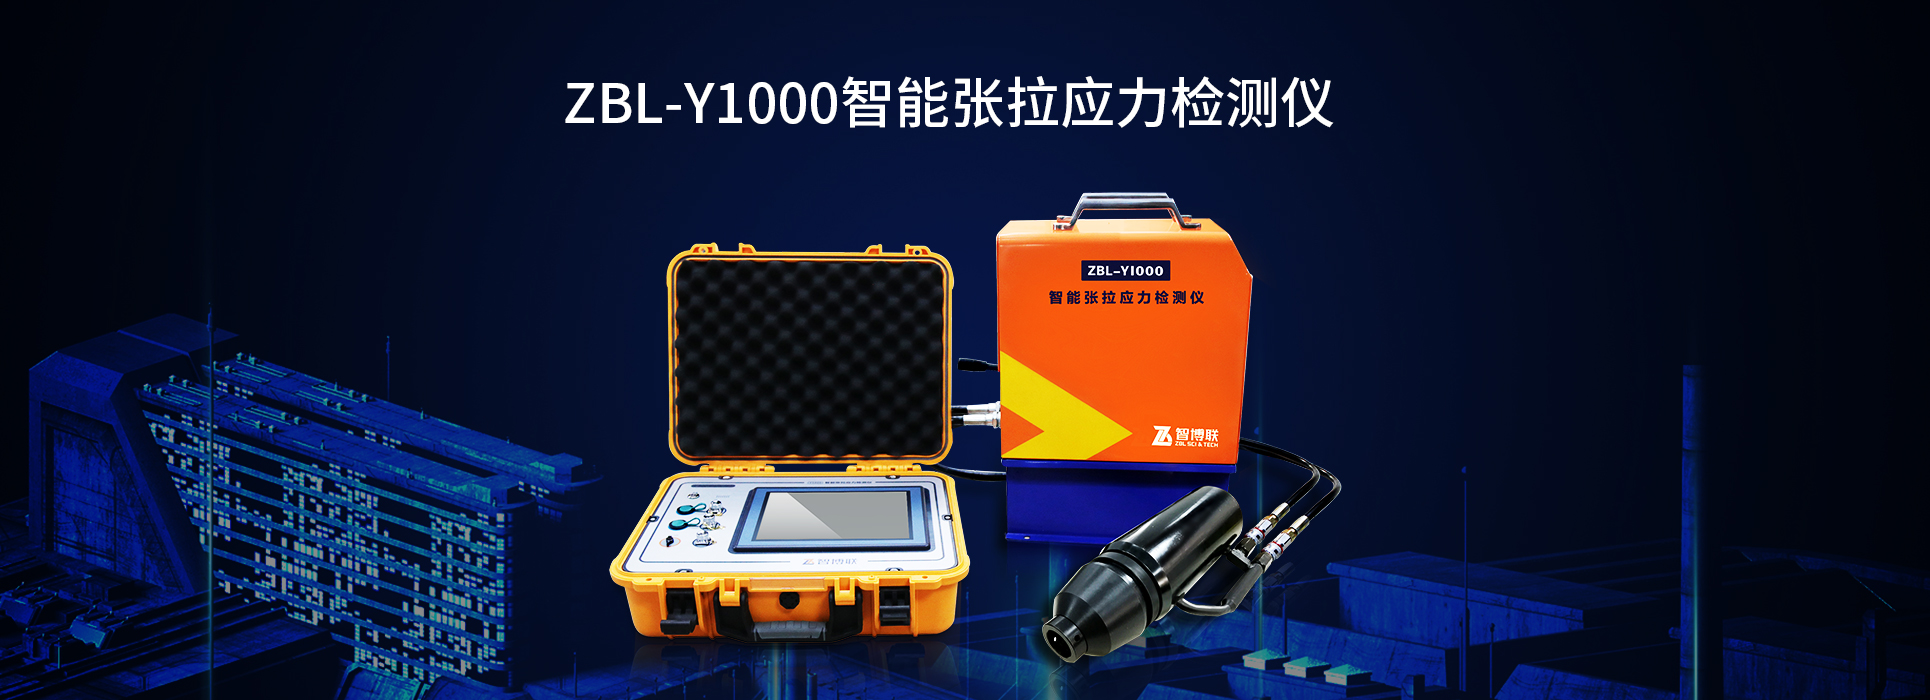 ZBL-Y1000智能張拉應力檢測儀